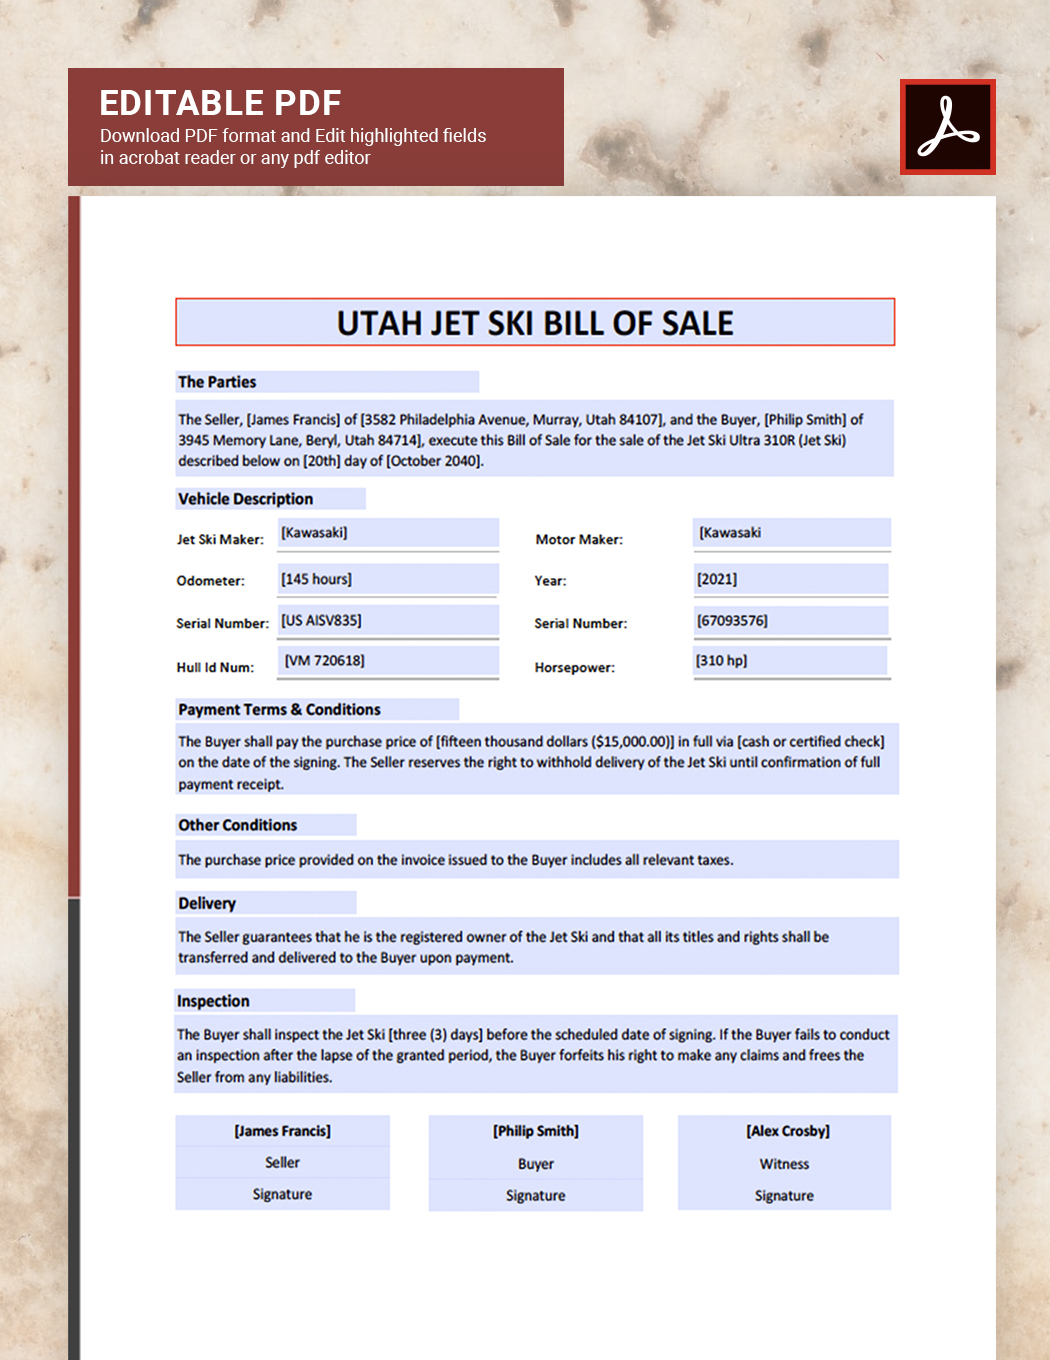 Utah Jet Ski Bill of Sale Template